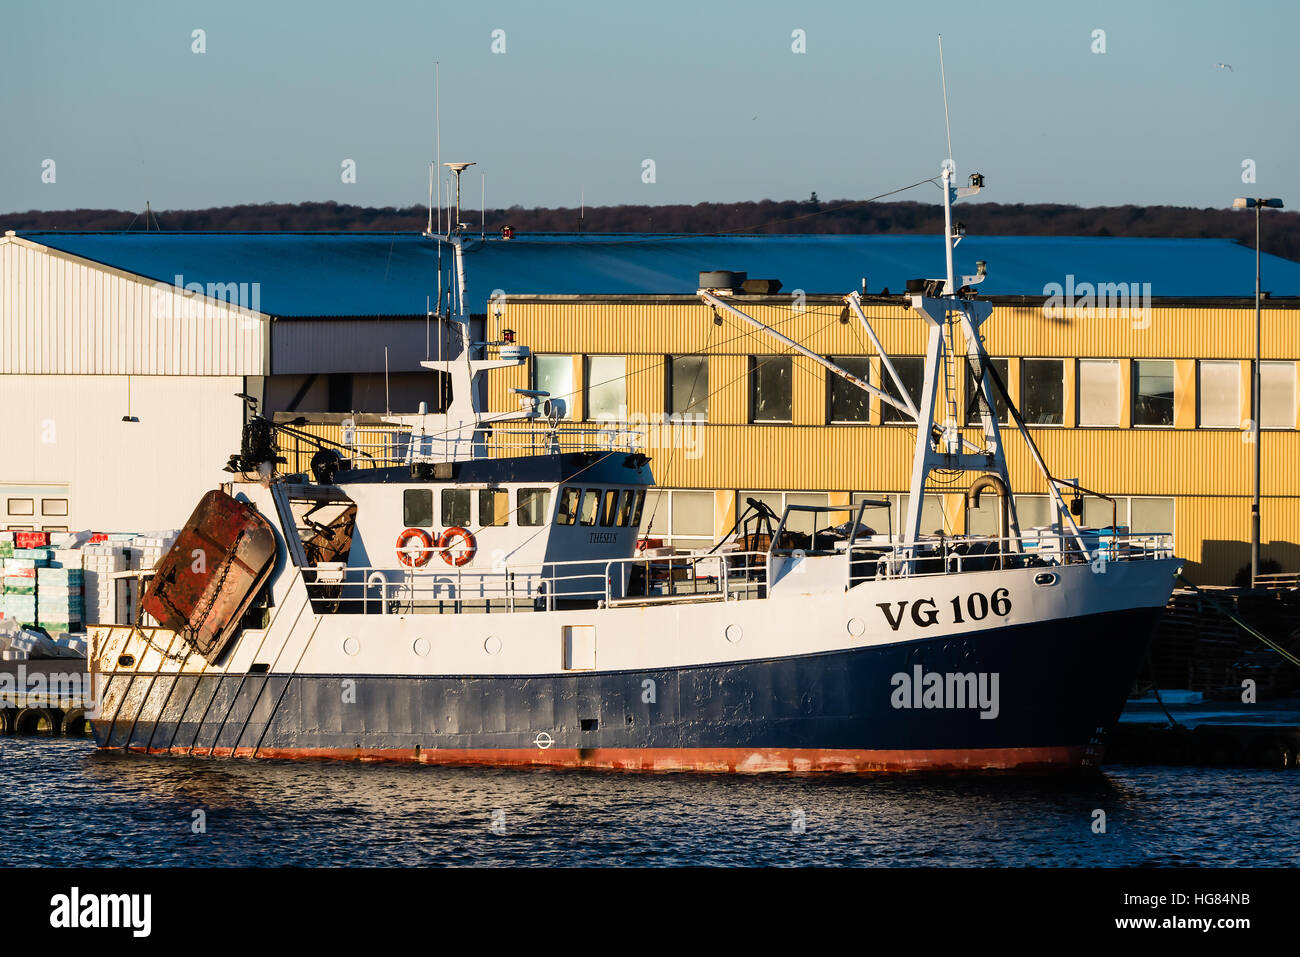 Karlskrona, Sweden - January 5, 2017: Documentary of fishing industry. The fishing boat VG 106 Theseus moored dockside in Saltö harbor, Karlskrona. Ye Stock Photo